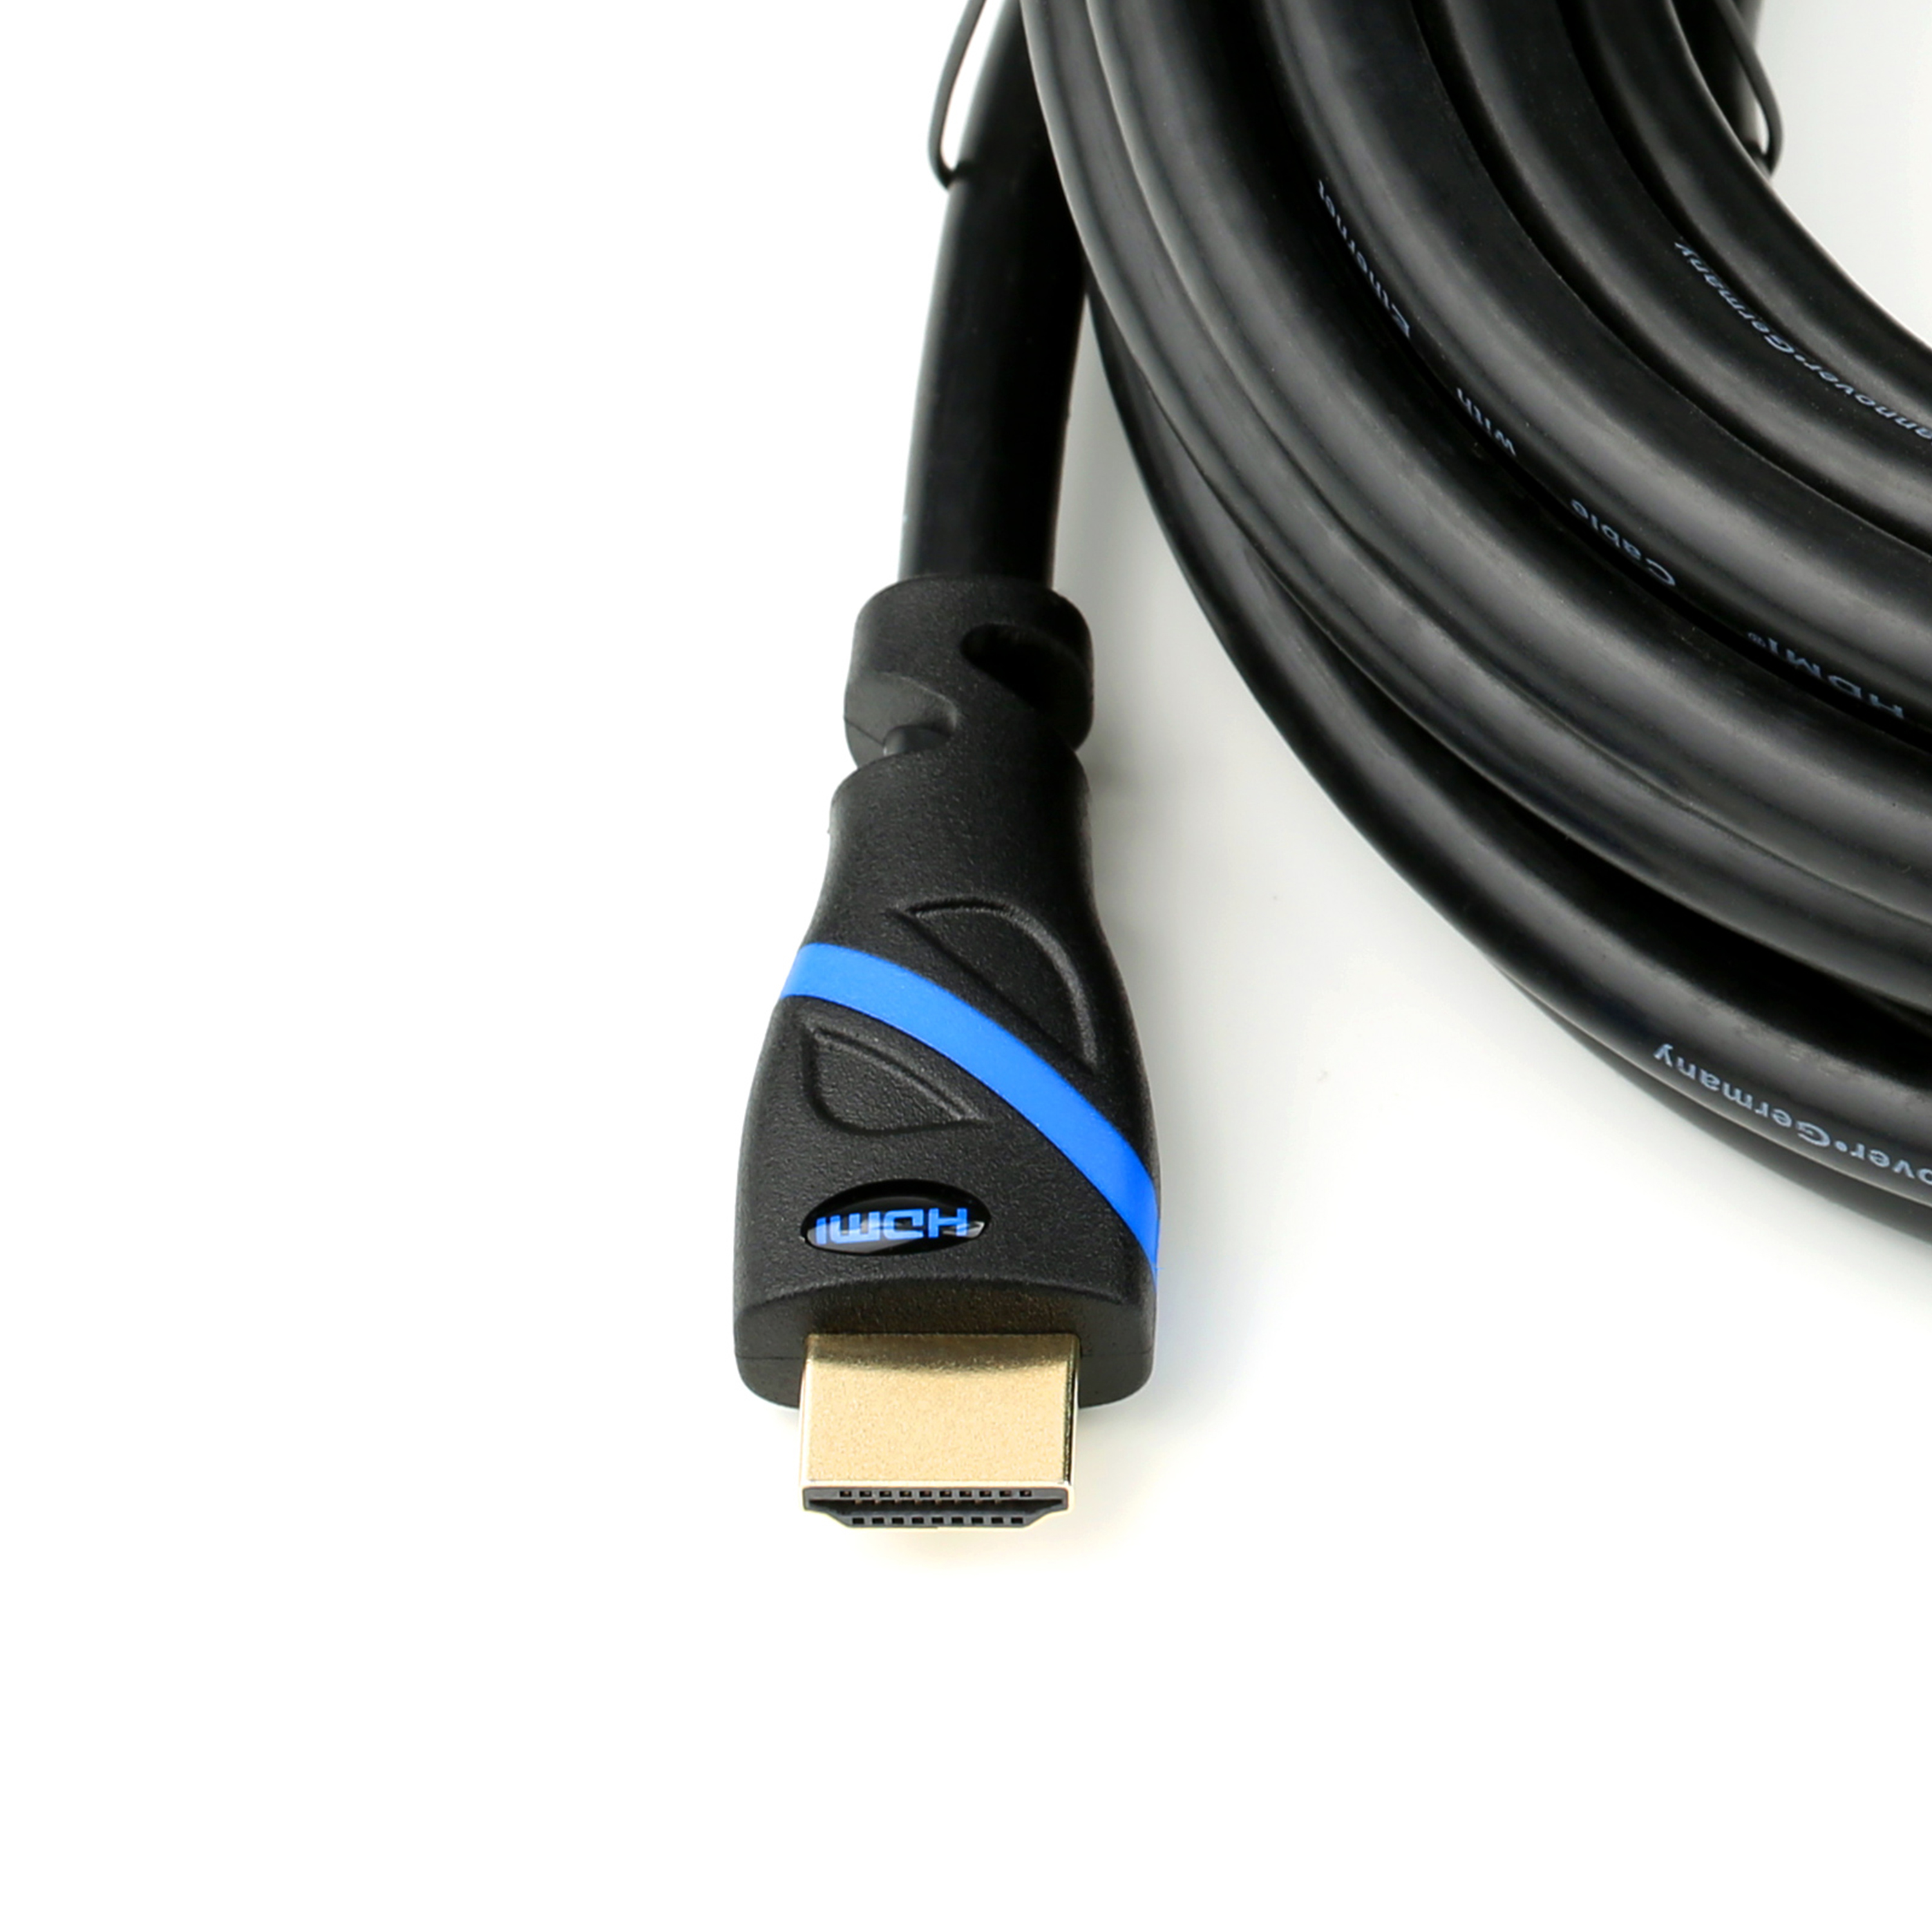 CSL HDMI 2.0 Kabel, 1,5m HDMI weiß/blau Kabel